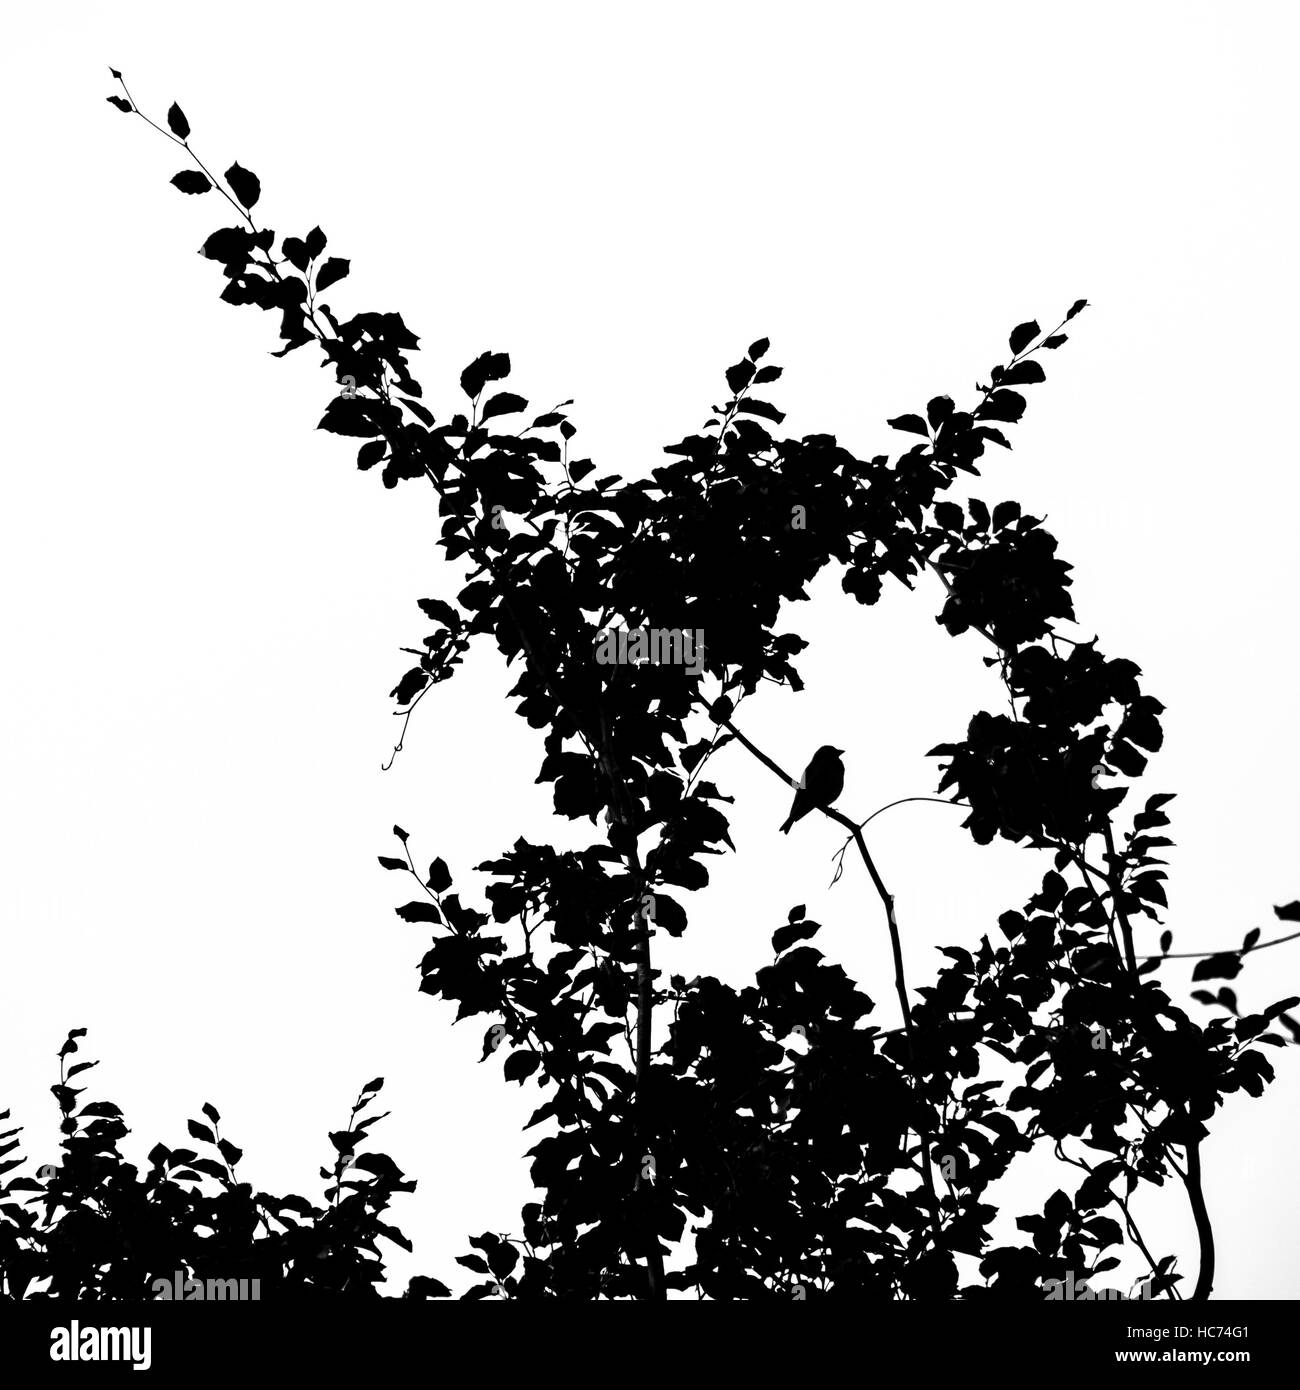 Tree silhouette with bird Stock Photo